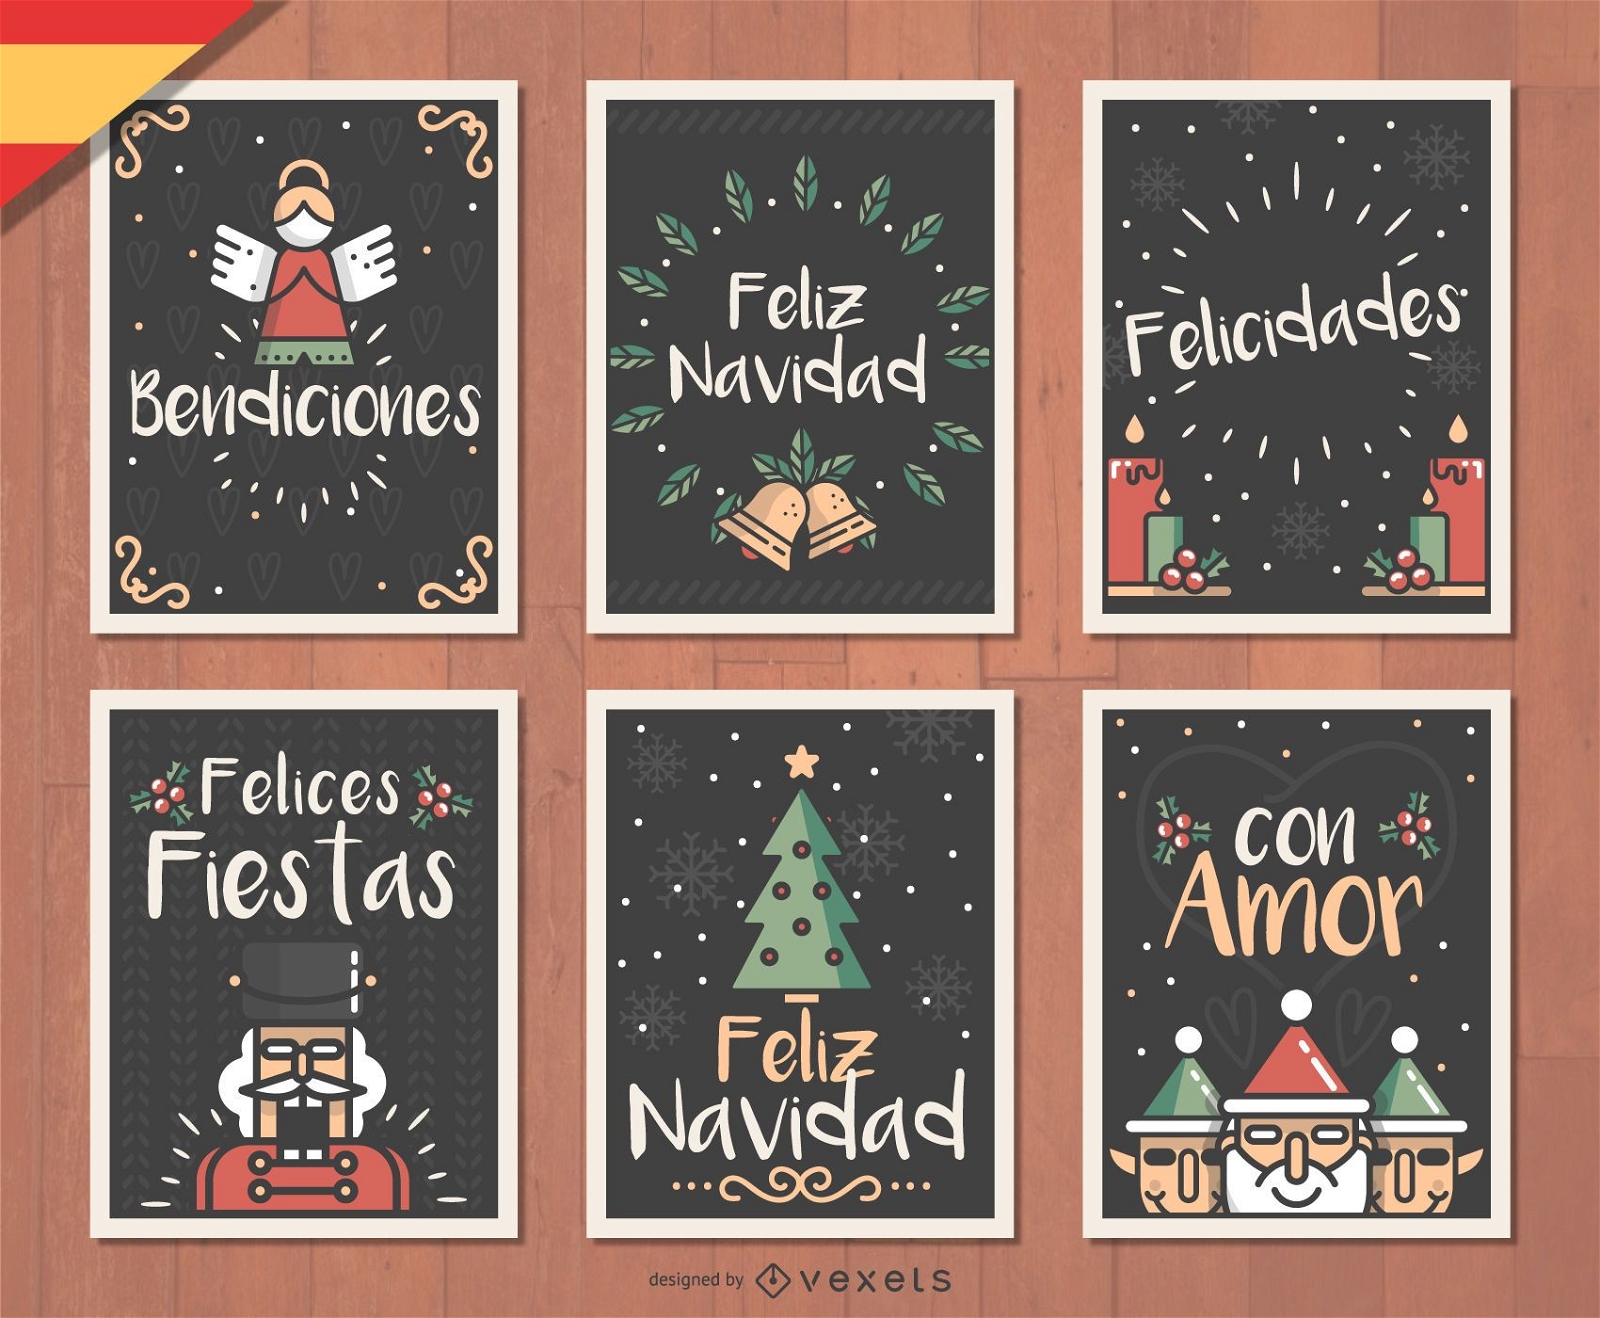 Cart?o de Natal espanhol Feliz Navidad